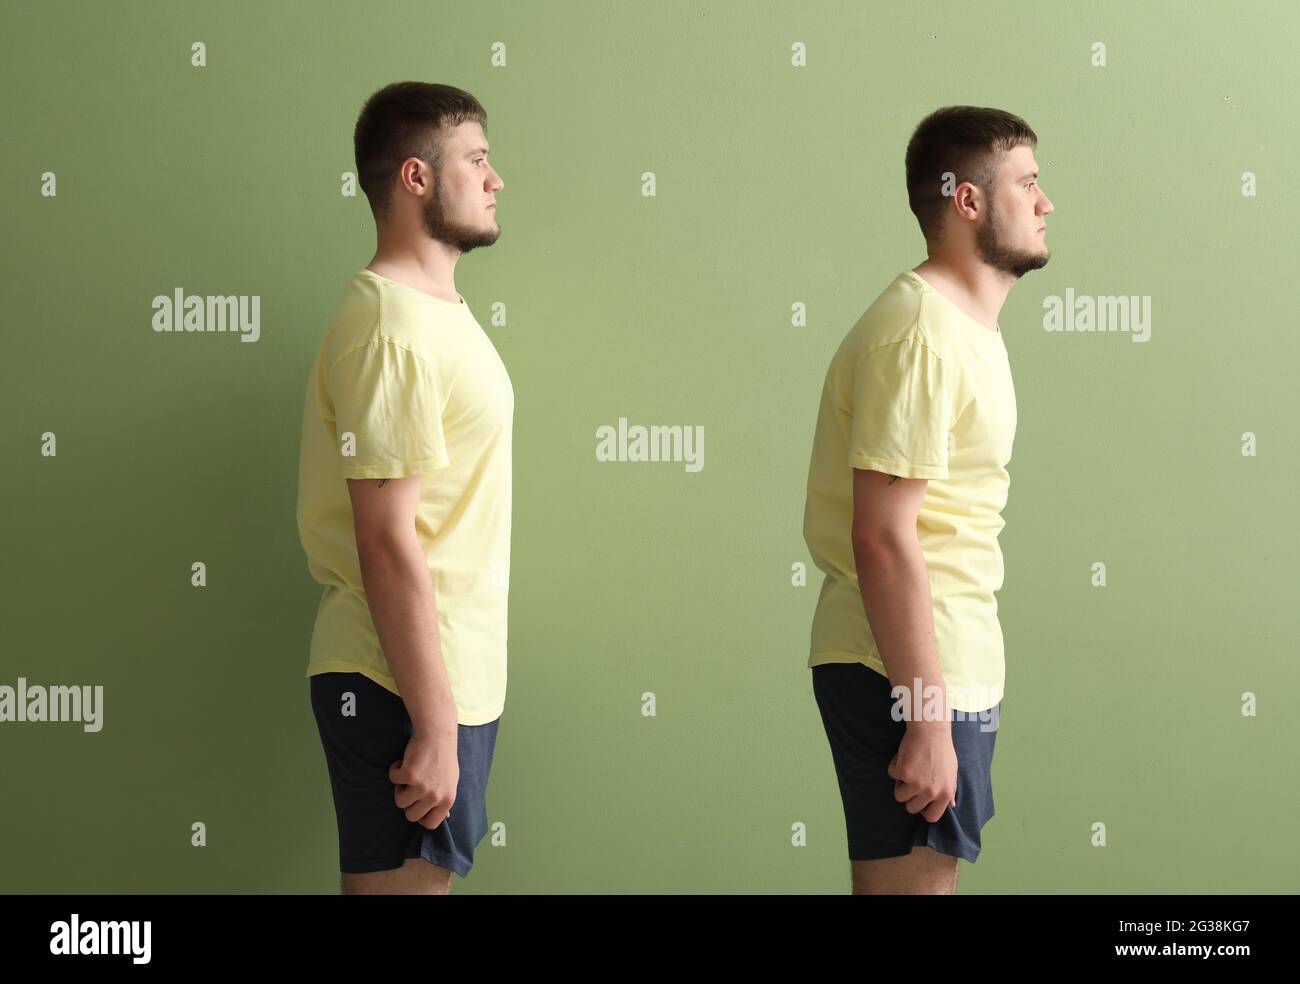 https://c8.alamy.com/comp/2G38KG7/young-man-with-bad-and-proper-posture-on-color-background-2G38KG7.jpg